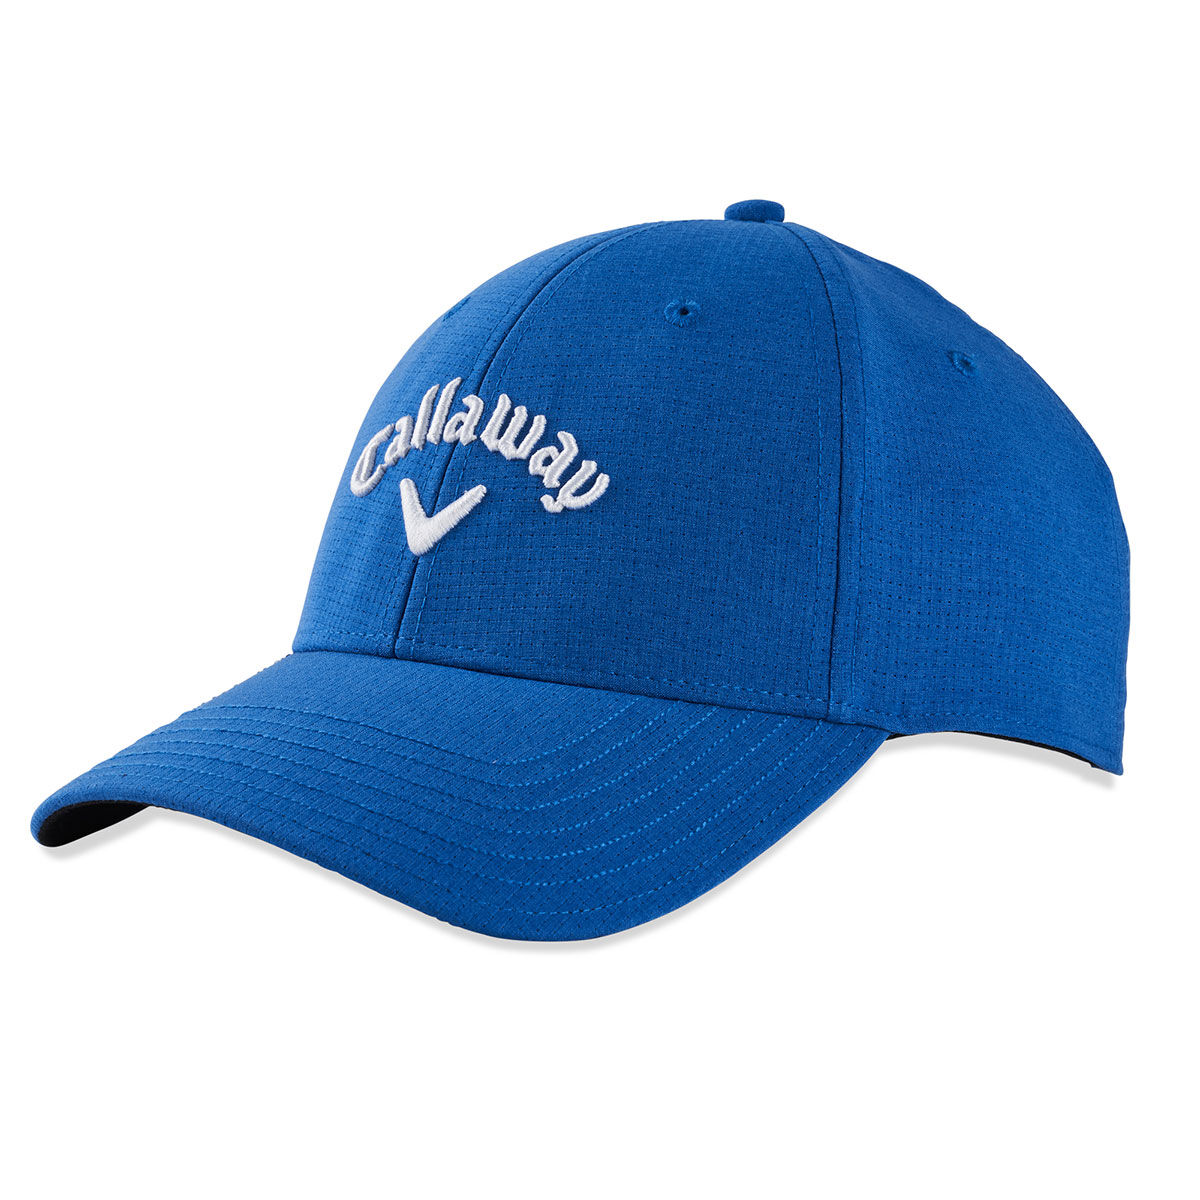 Callaway Golf Men's Stitch Magnet Cap, Mens, Royal blue, One size | American Golf von Callaway Golf